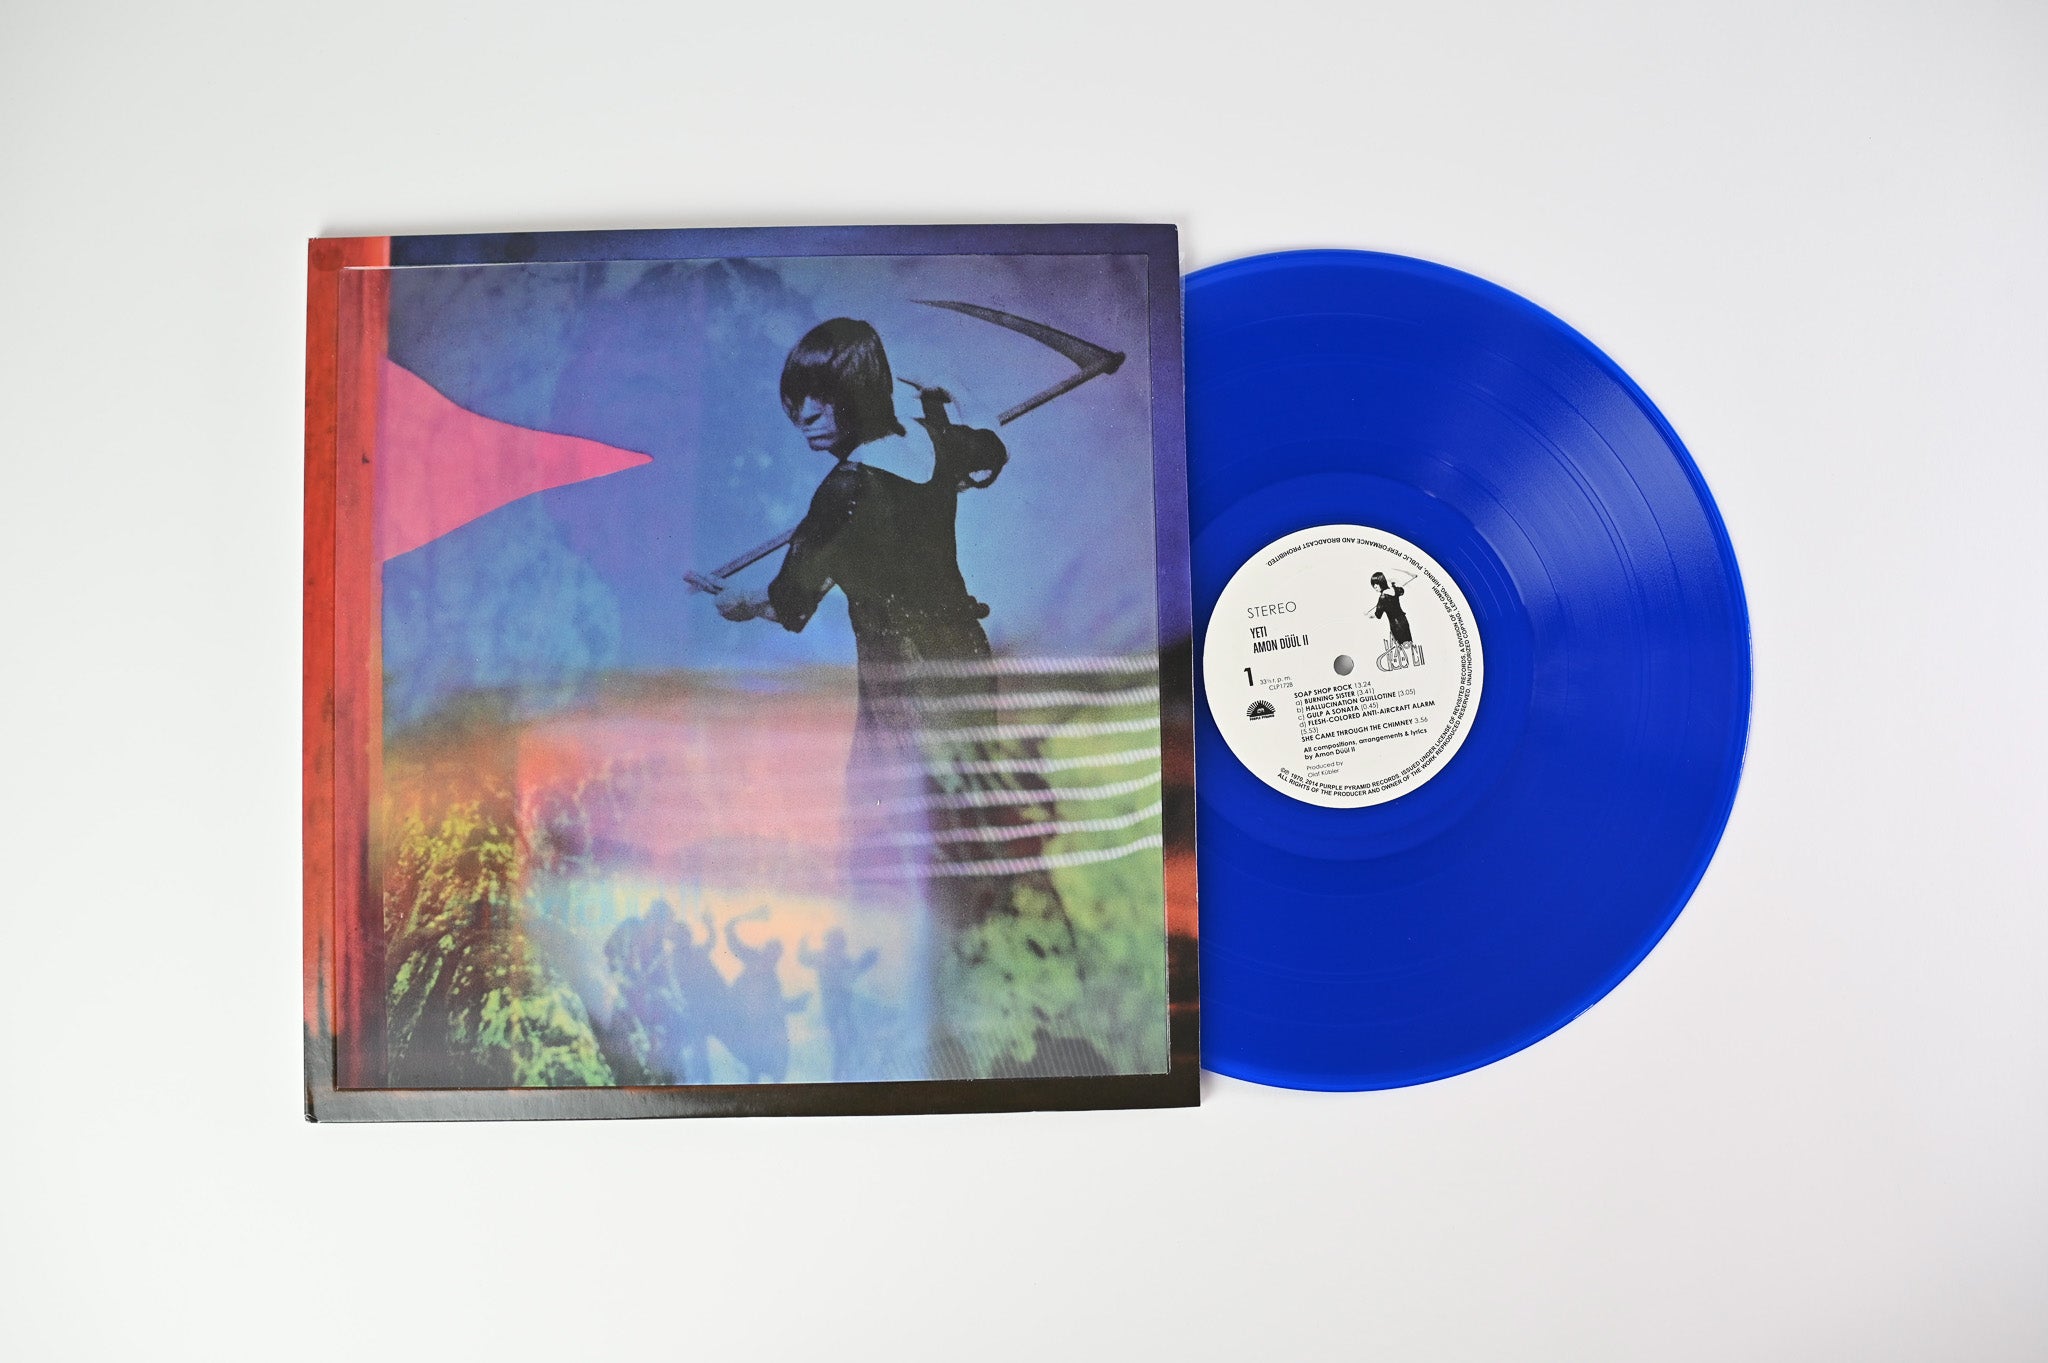 Amon Düül II - Yeti on Purple Pyramid Reissue on Blue Vinyl w/ Lenticular Cover